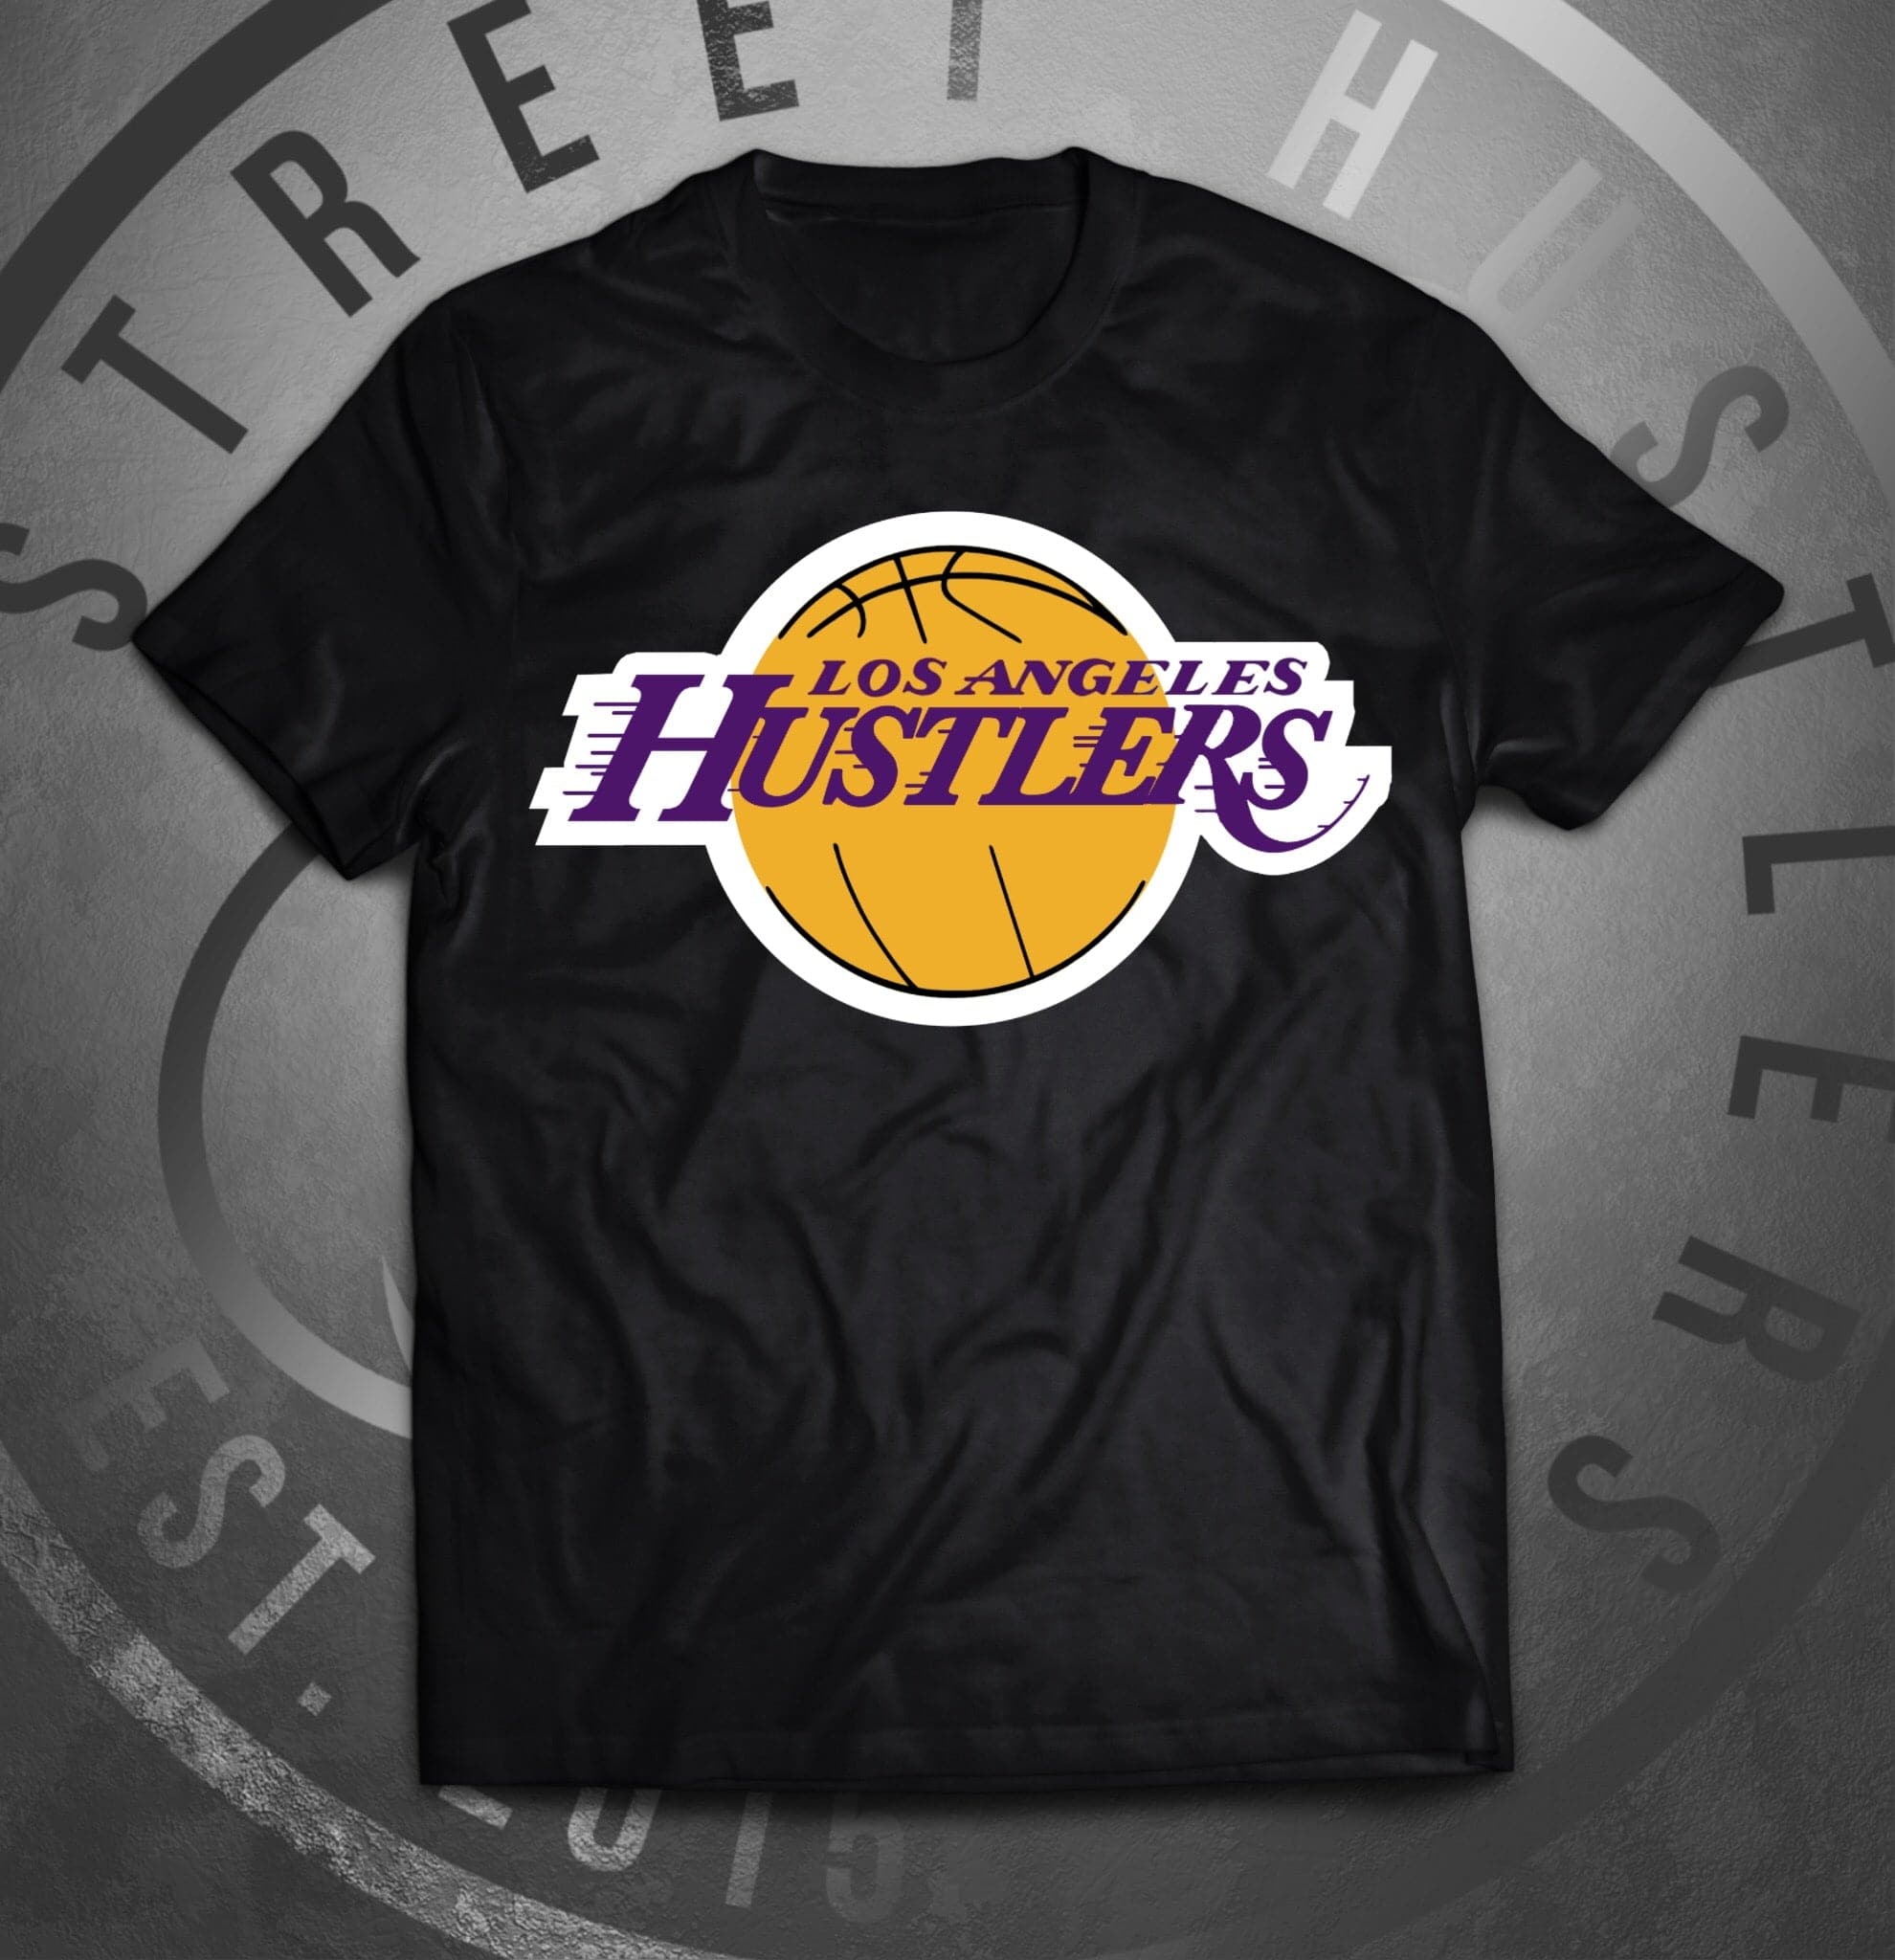 Los Angeles Hustlers T-shirt (Black)